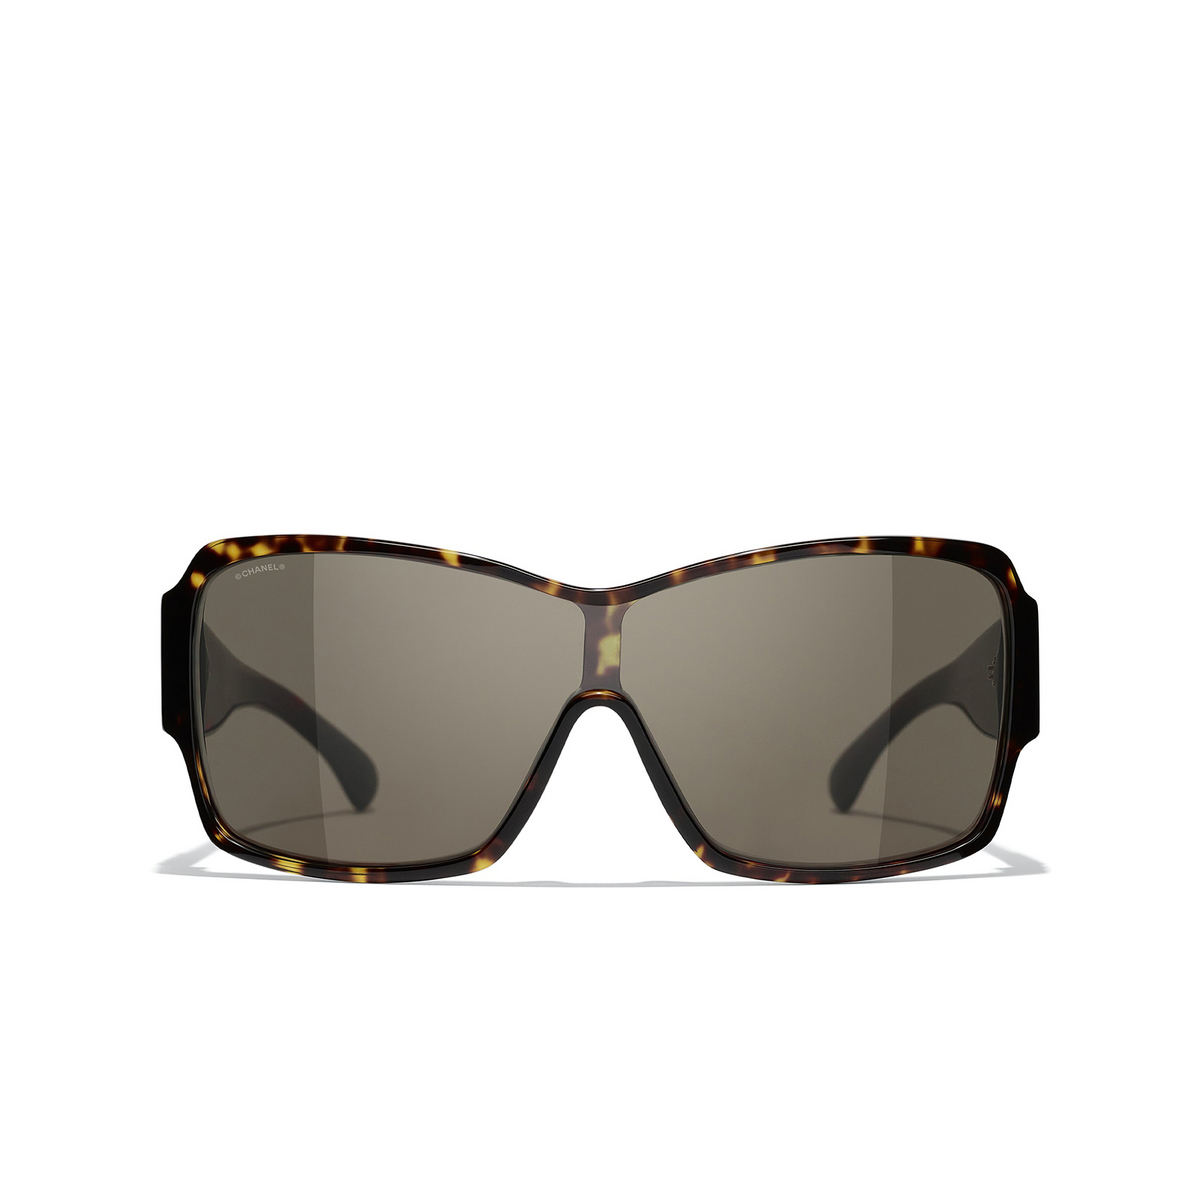 CHANEL shield Sunglasses C714/3 Dark Tortoise - front view